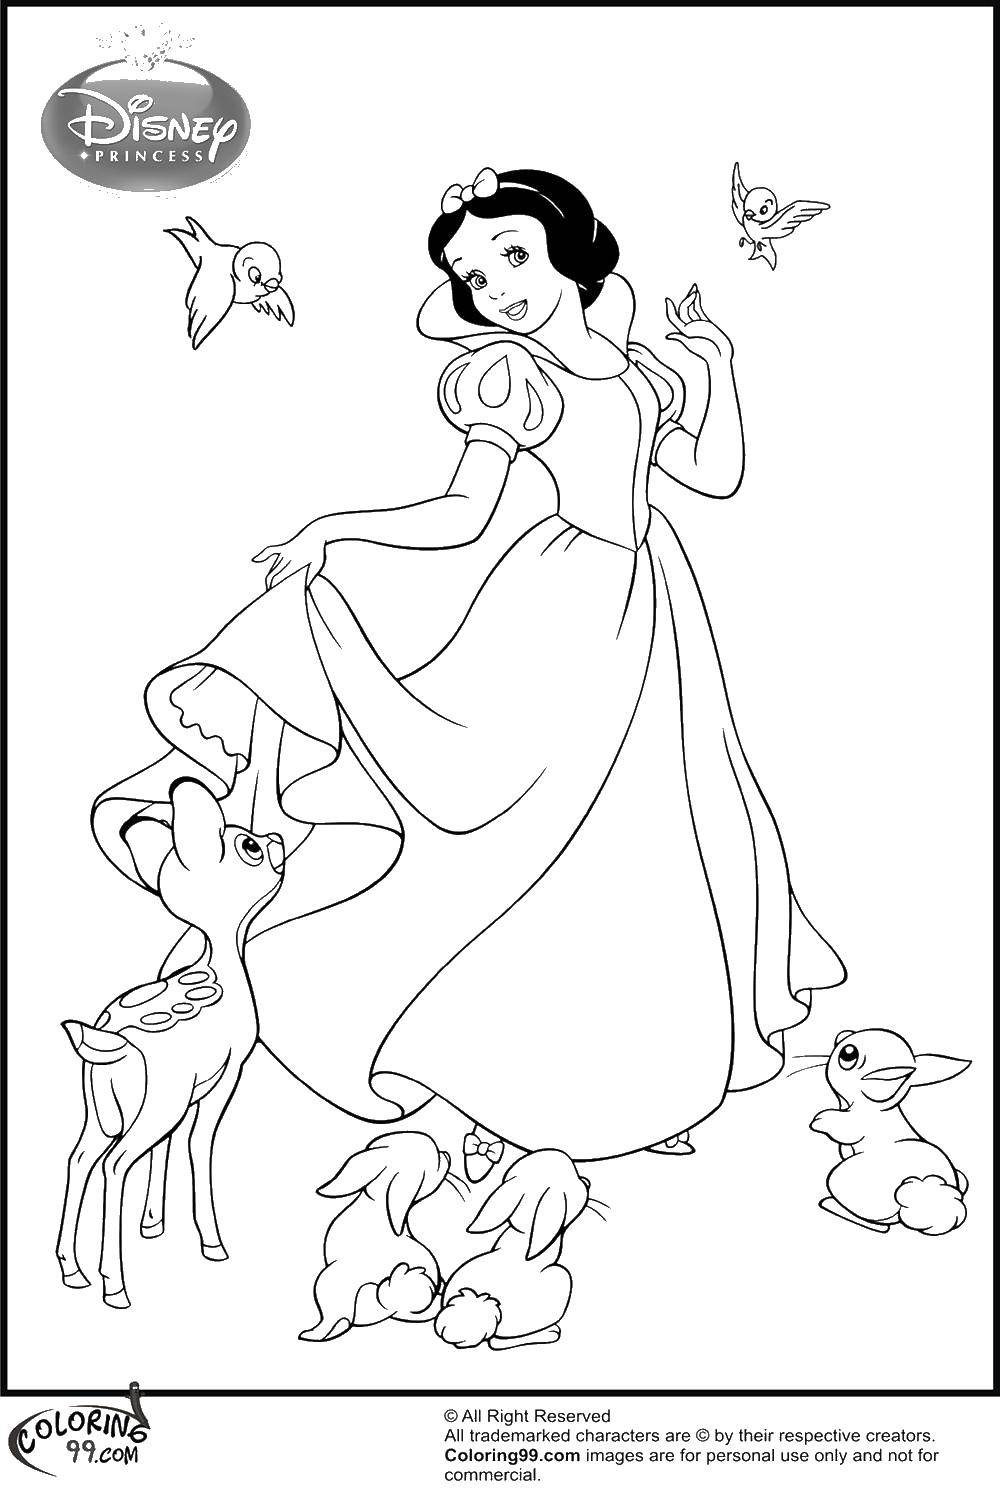 Coloring Disney snow white. Category snow white. Tags:  Snow white, princesses, cartoons, fairy tales.